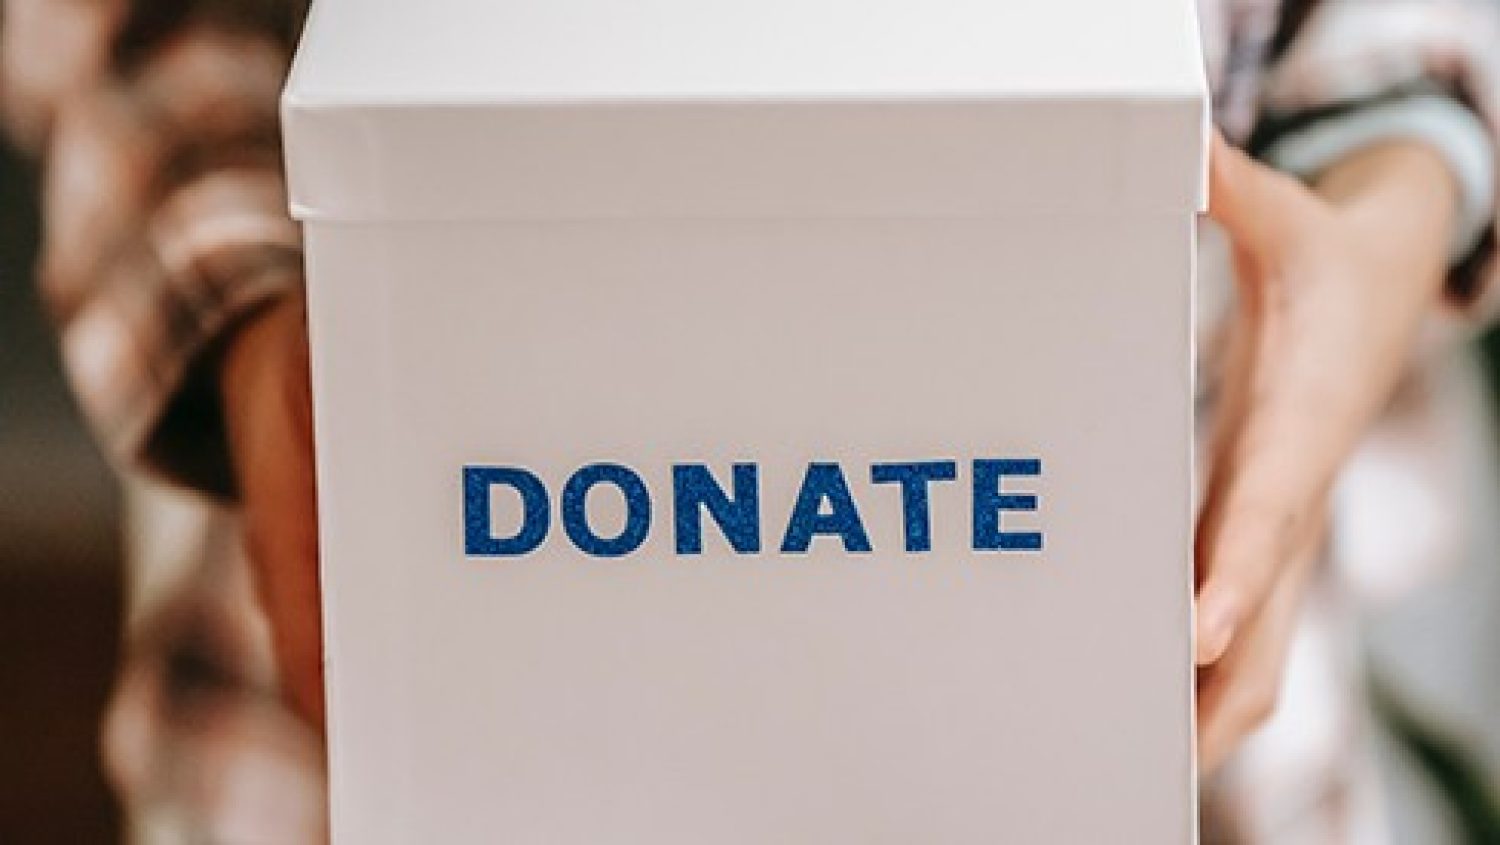 Donation box image